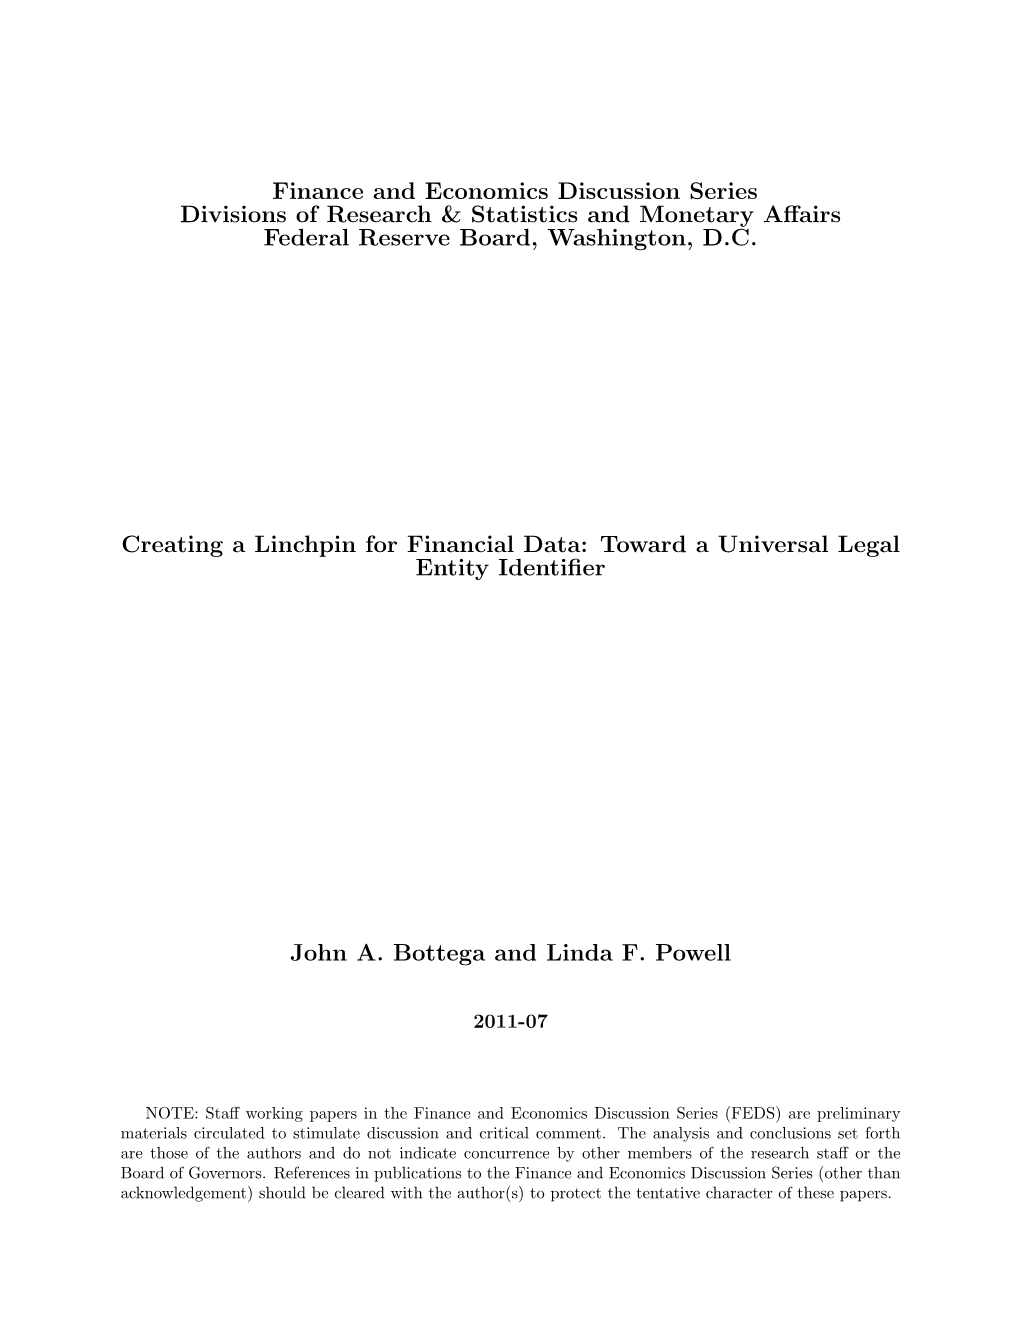 Printable Version (PDF)